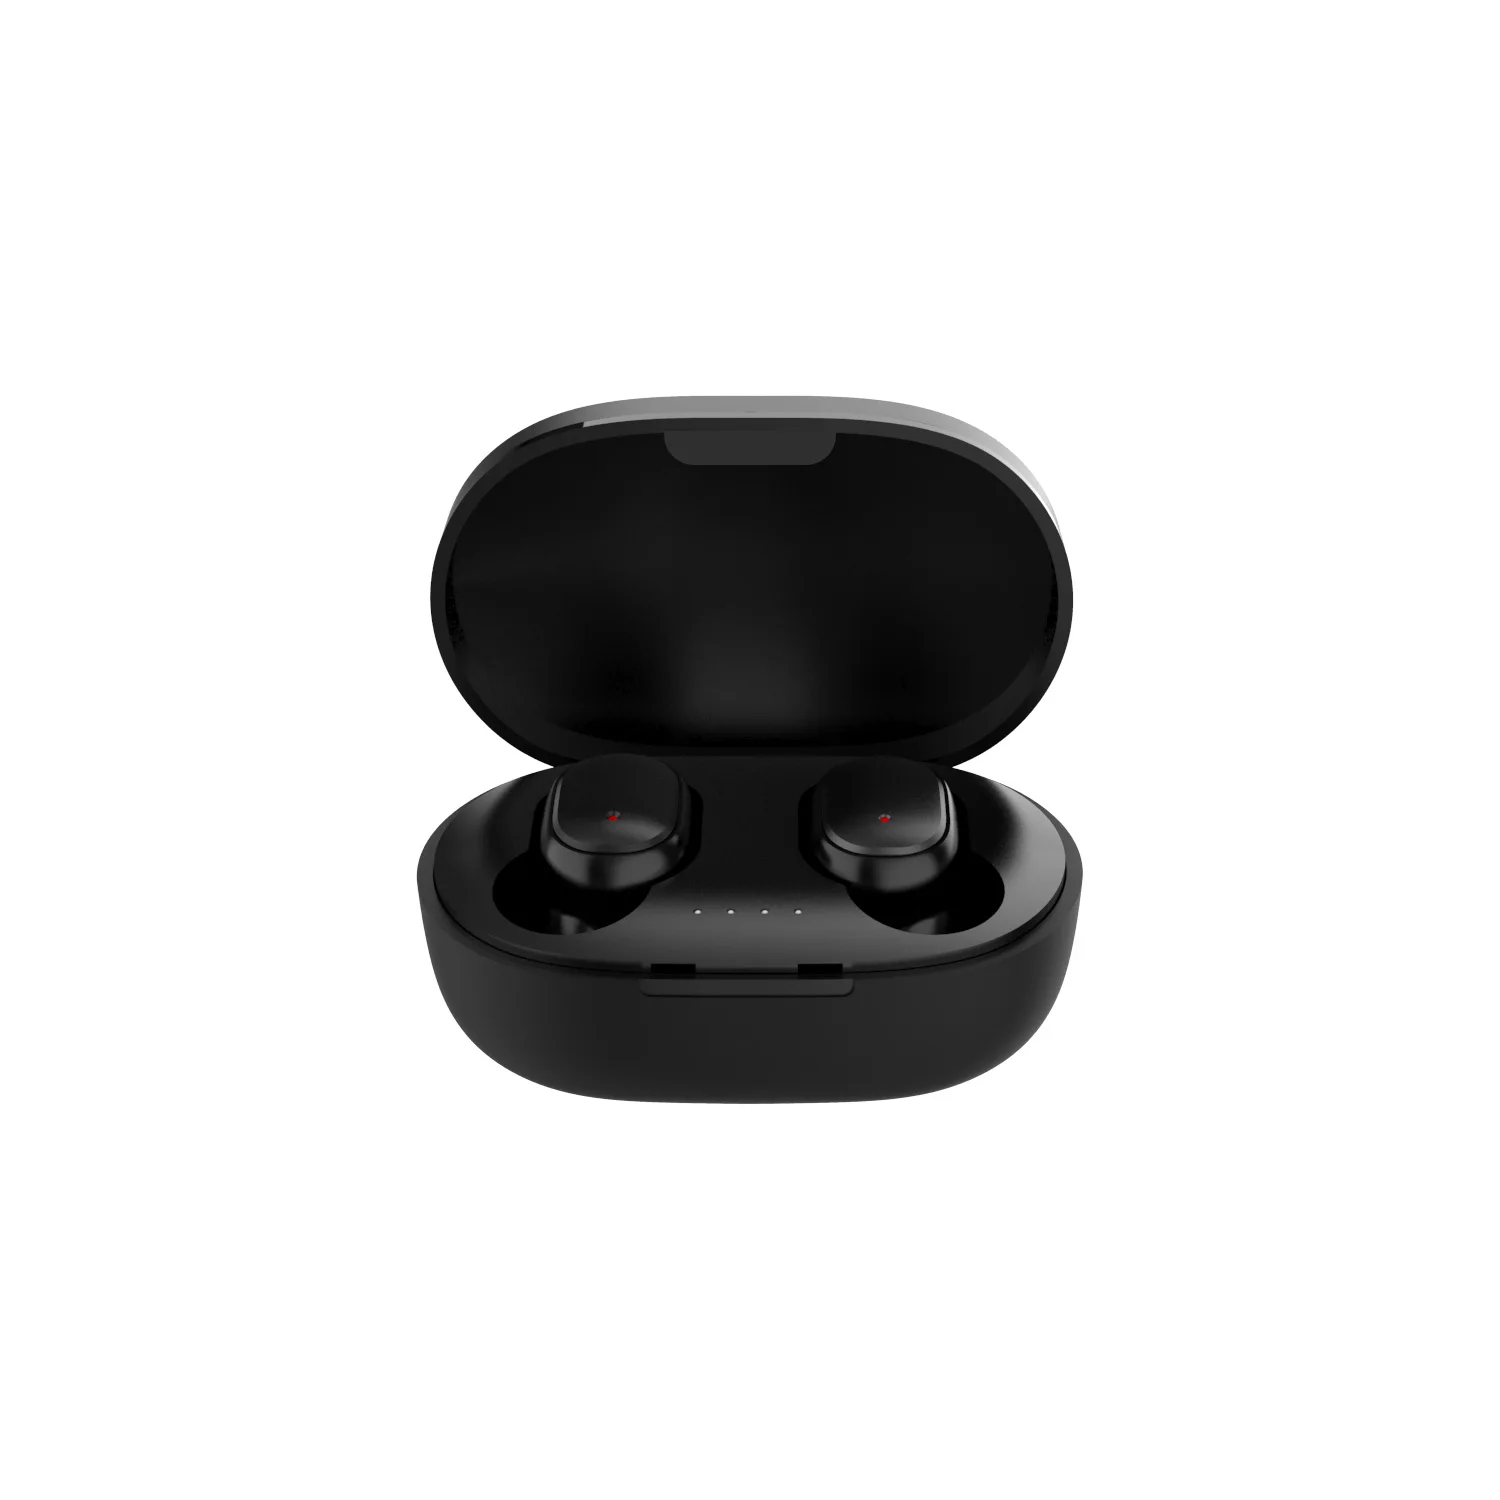 

Mini Auriculares Comfort Sweatproof Tws 5.0 Earphone Premium True Wireless HD Earbuds A6S Pro Audifonos Earphones for Sports